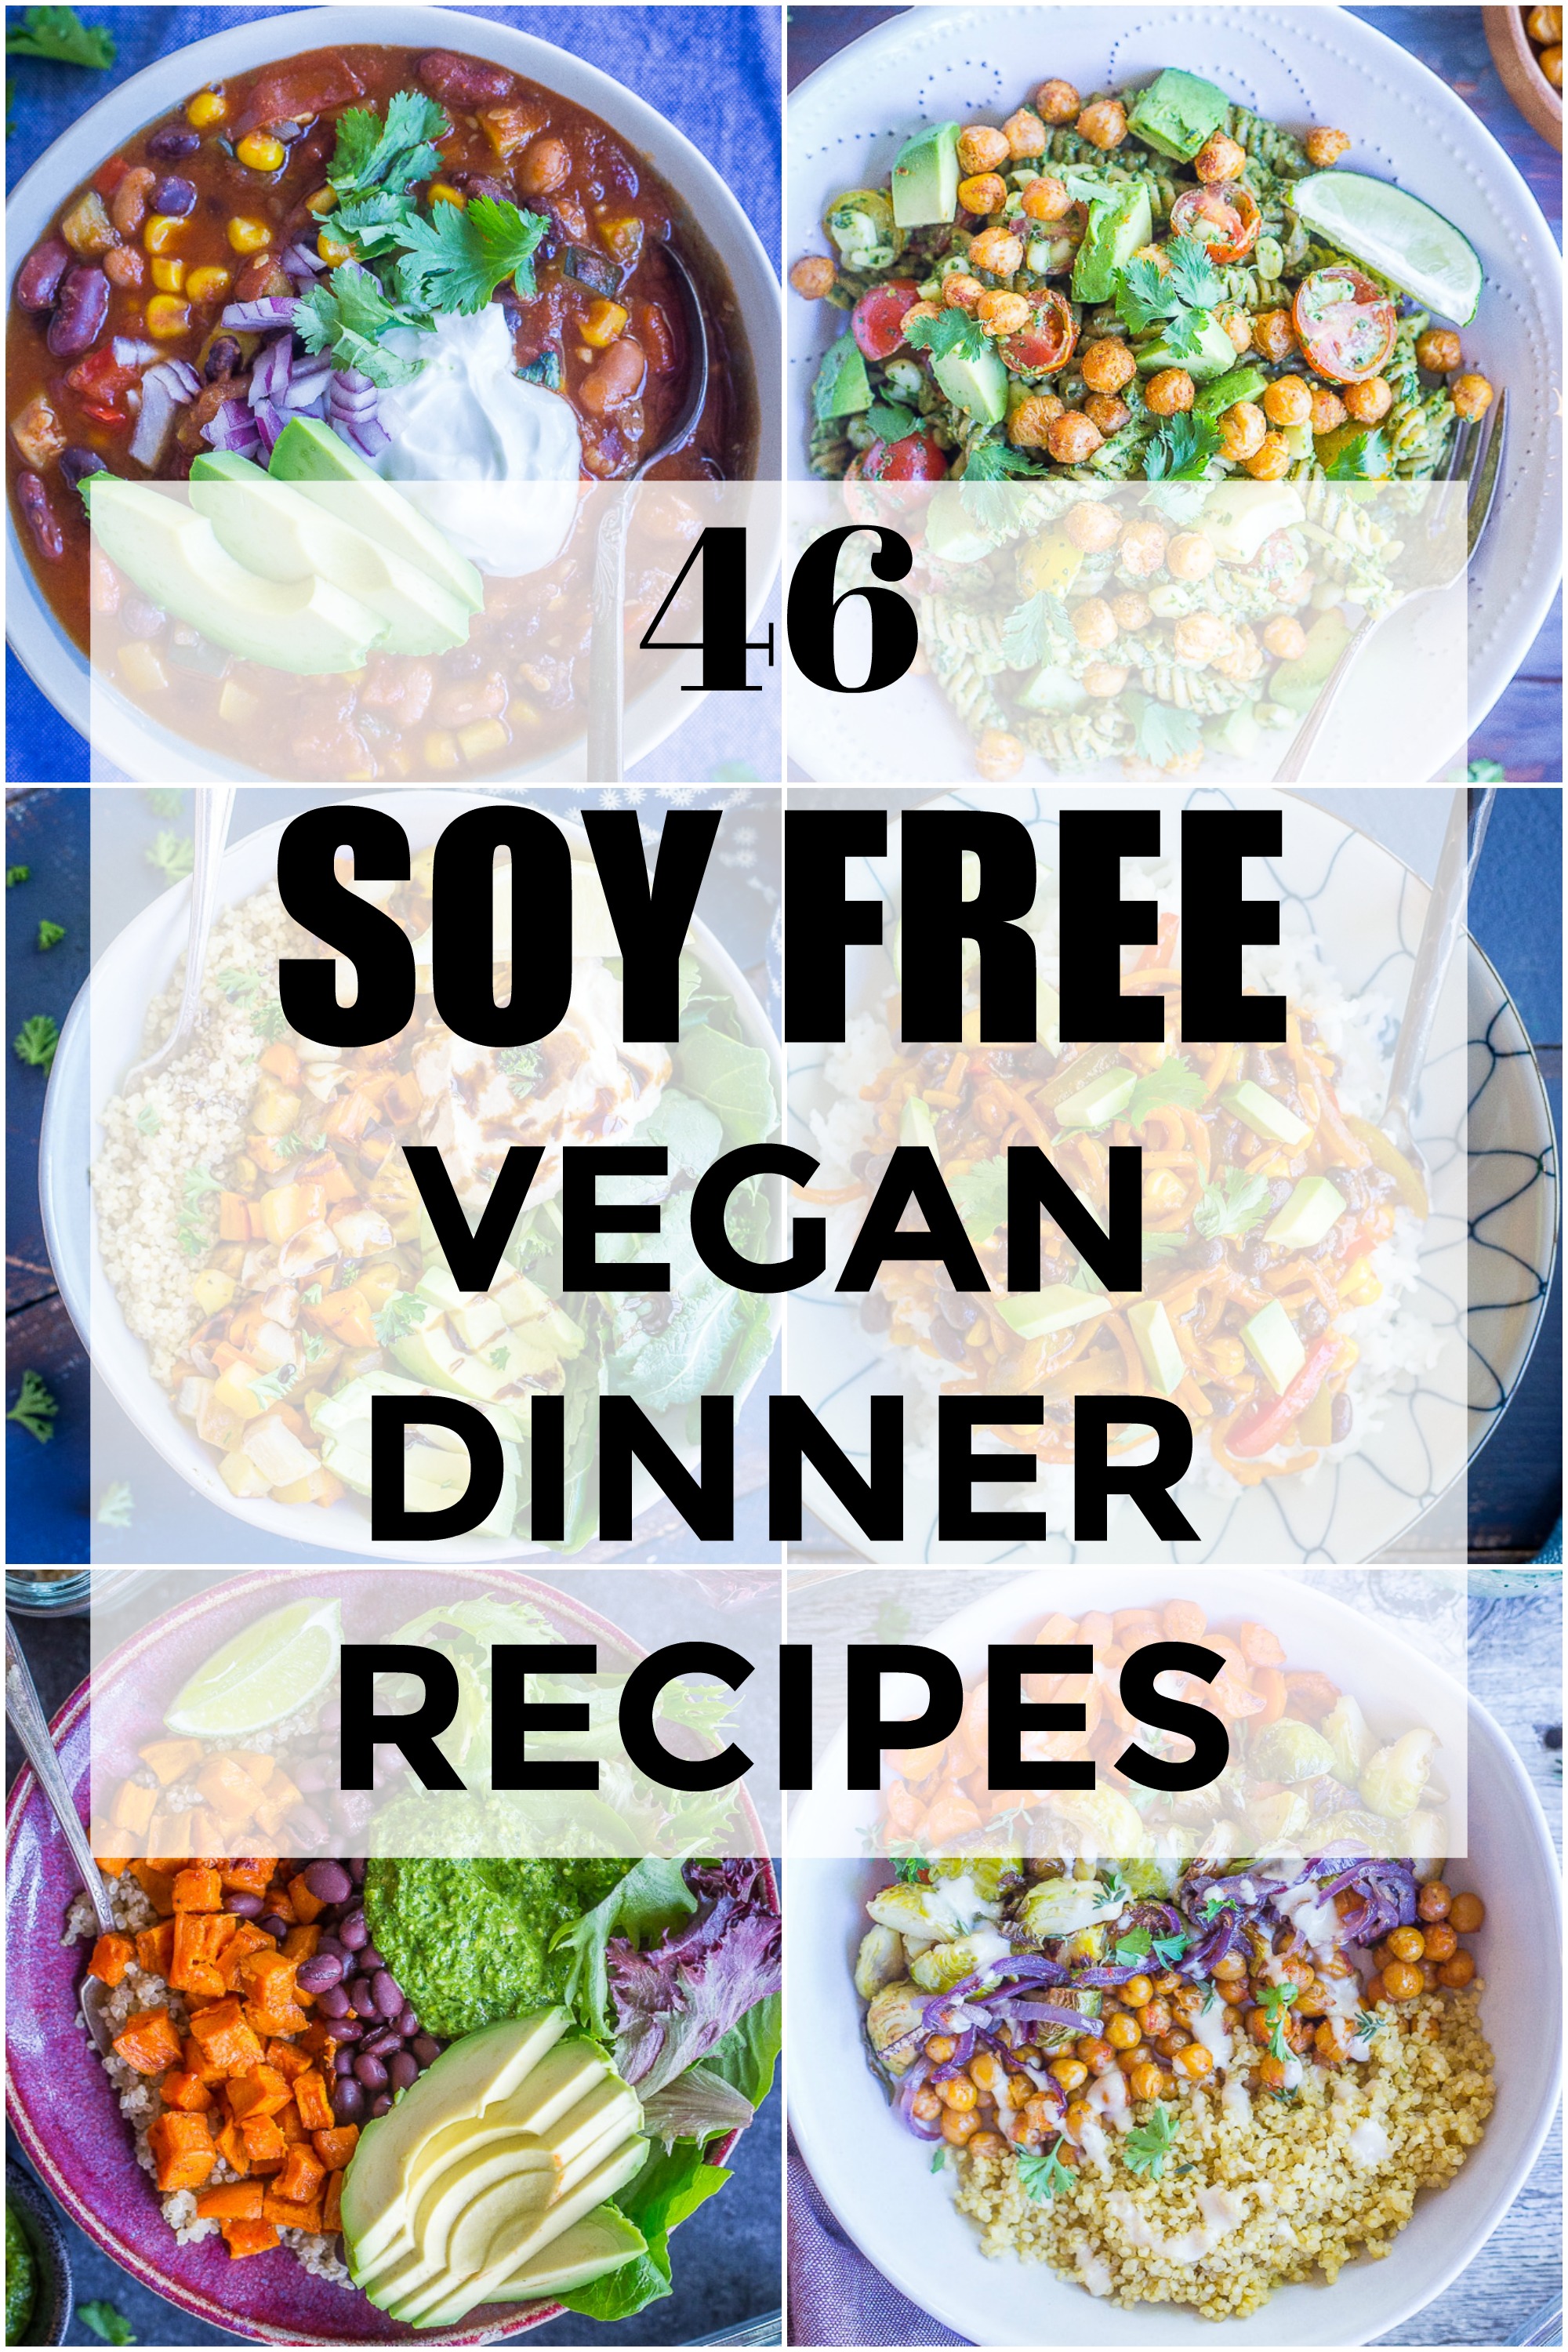 46 Soy Free Vegan Dinner Recipes She Likes Food - 